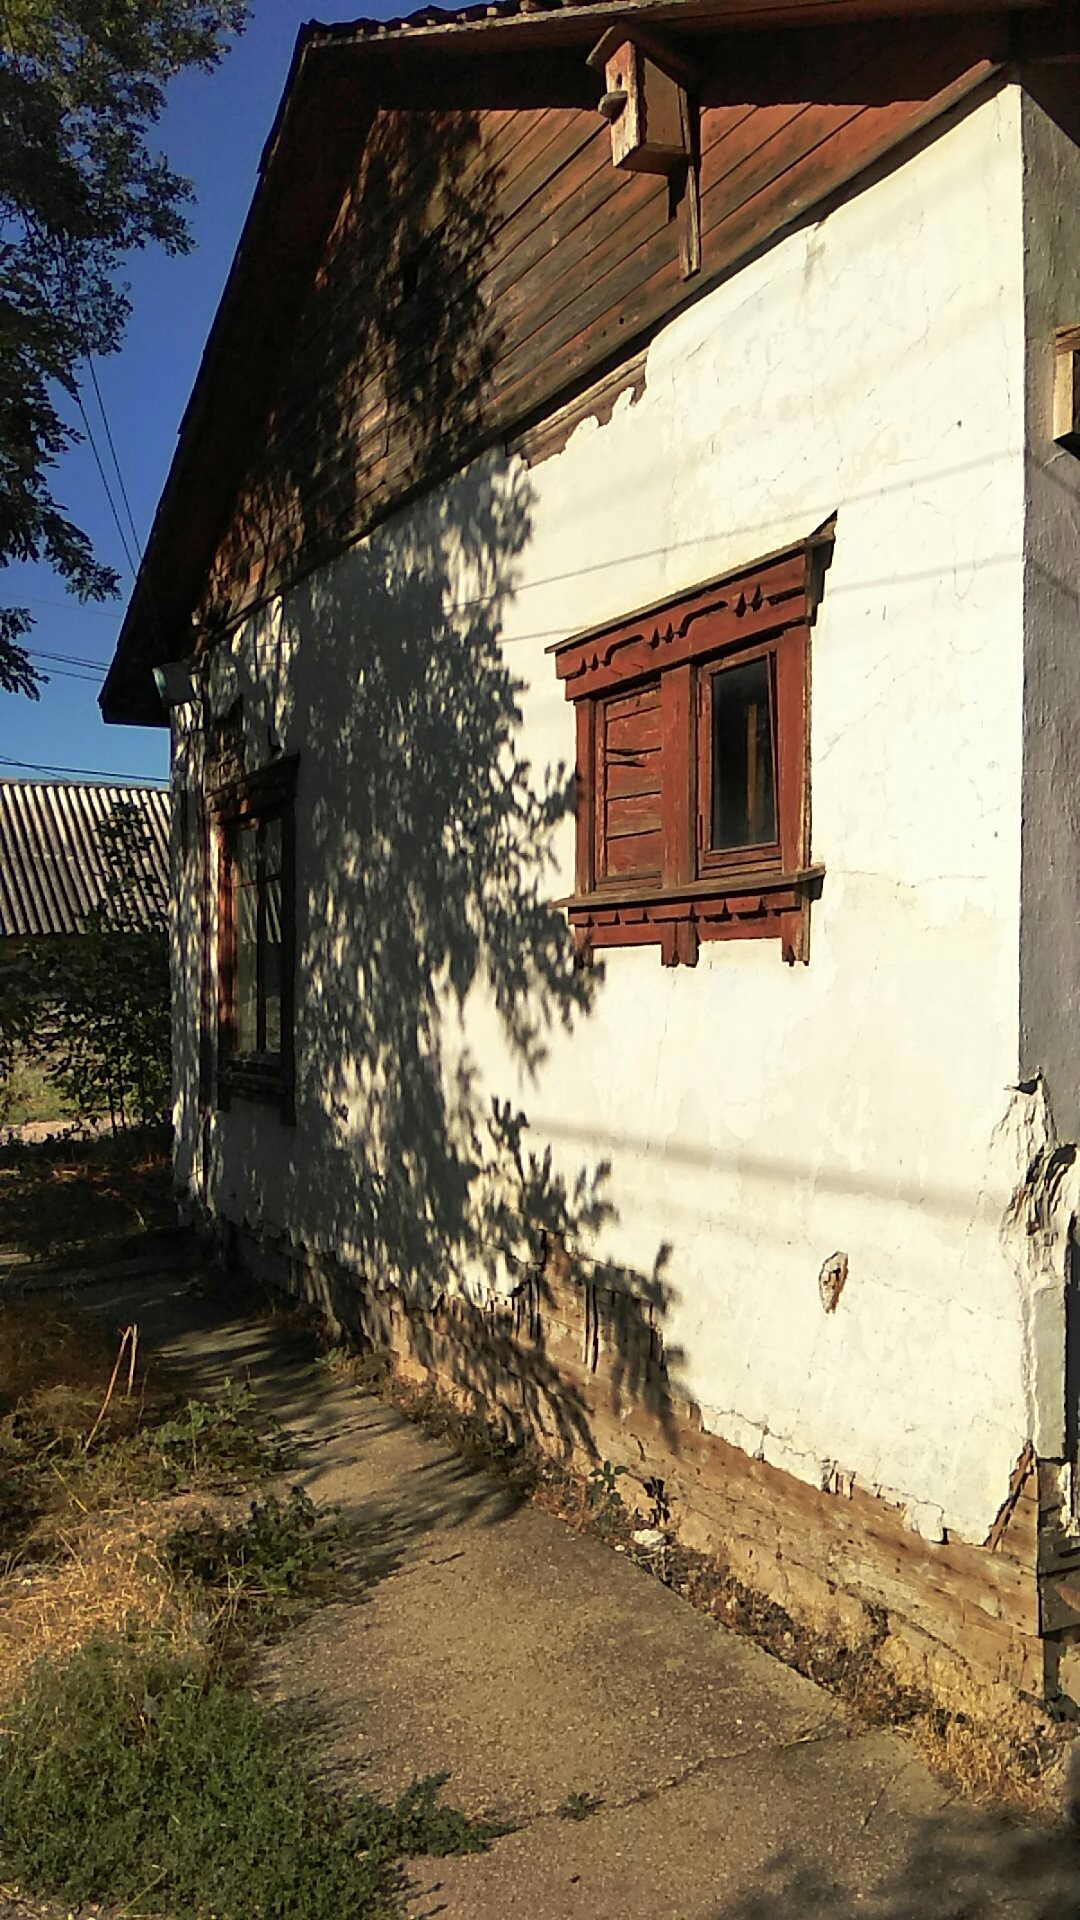 Post office Shirokoye village (Crimea) 297510 - My, Post office, Repair, Trend, Longpost